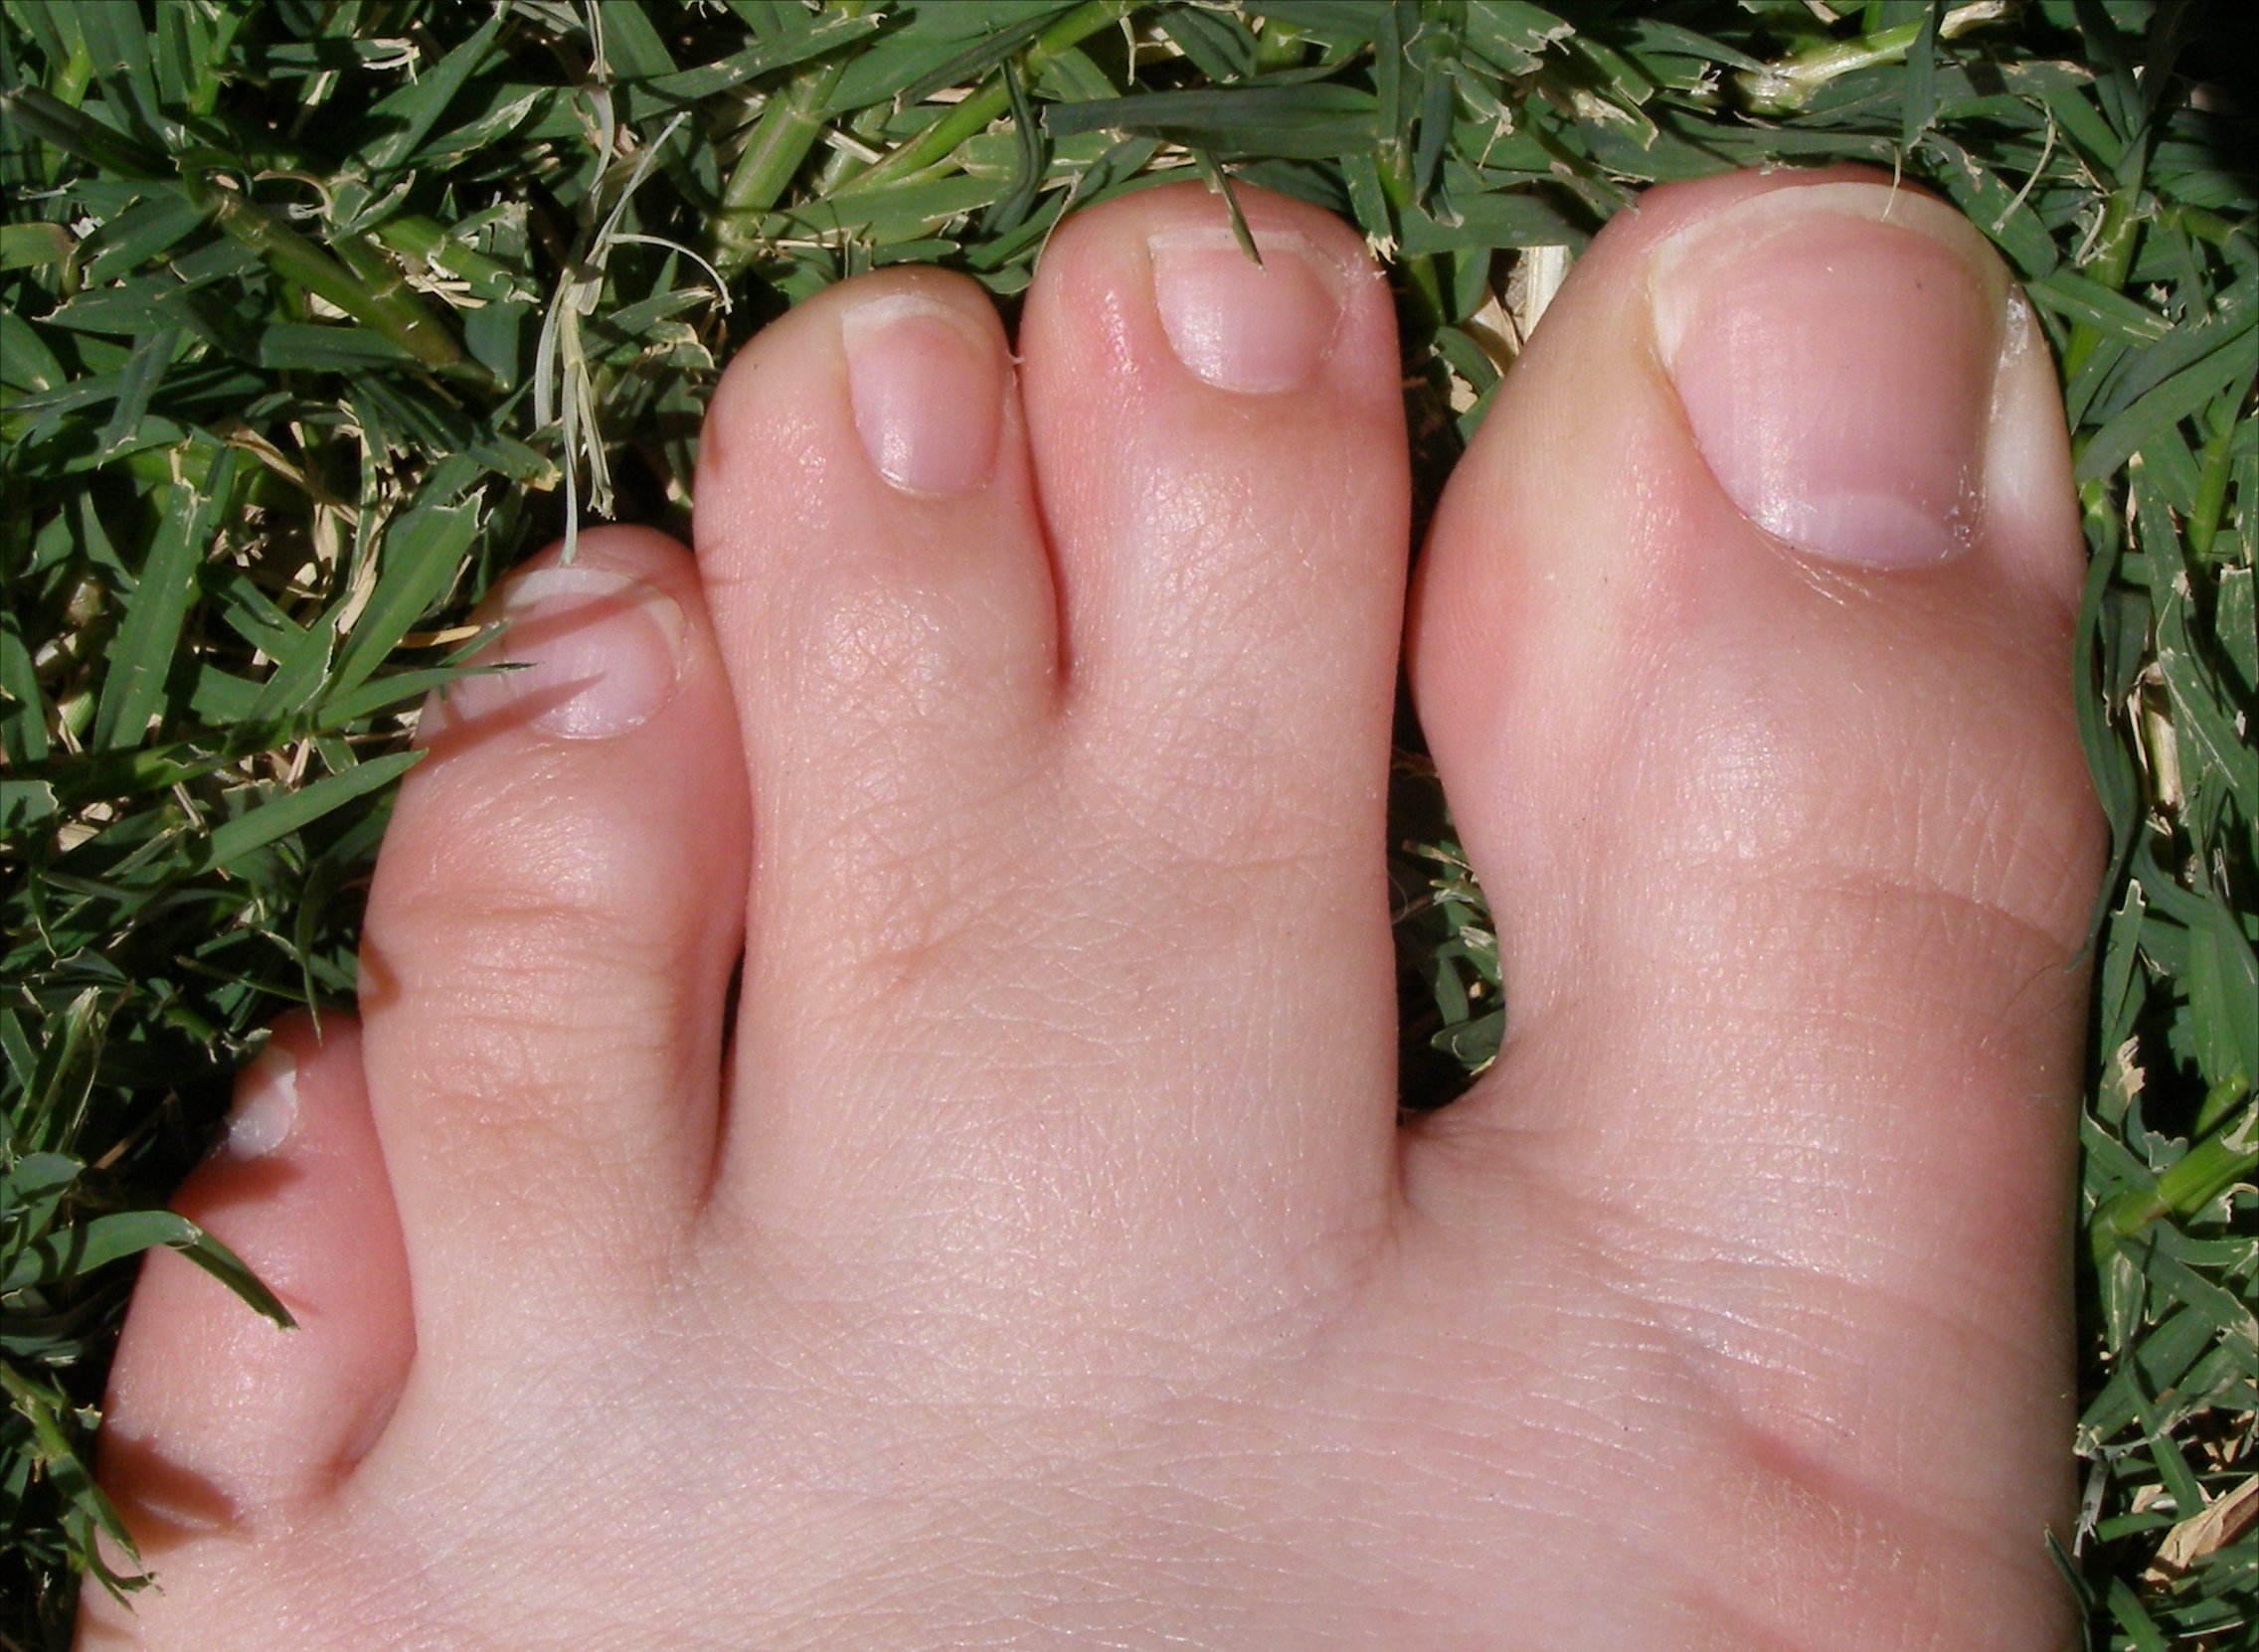 Is webbed feet dominant?